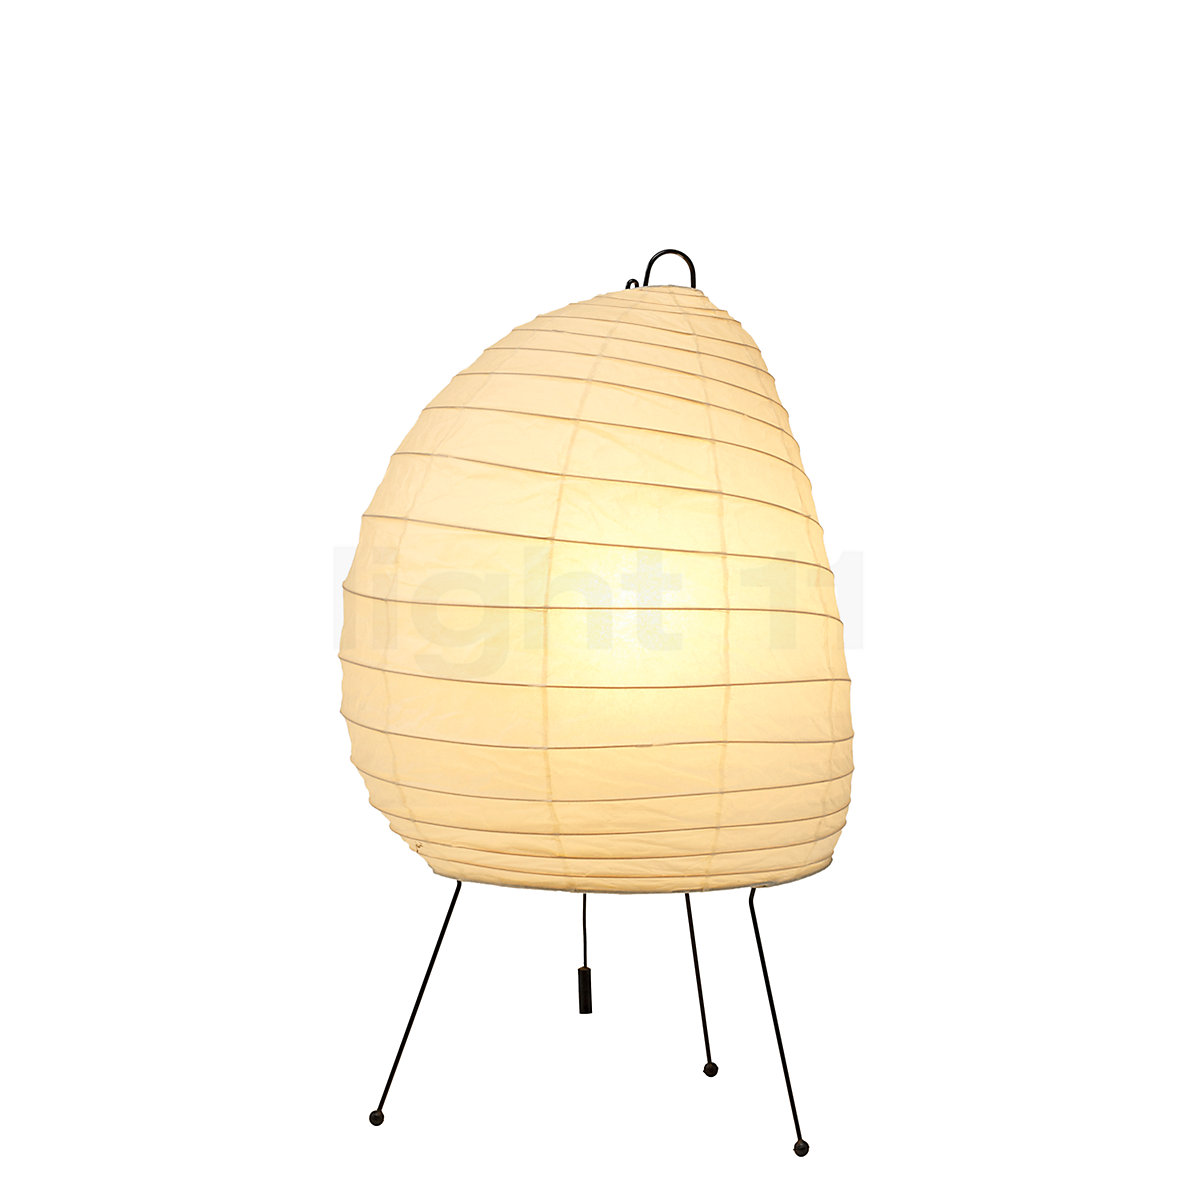 Vitra Akari N Table Lamp At Light11 Eu, Akari Table Lamp Model 1n